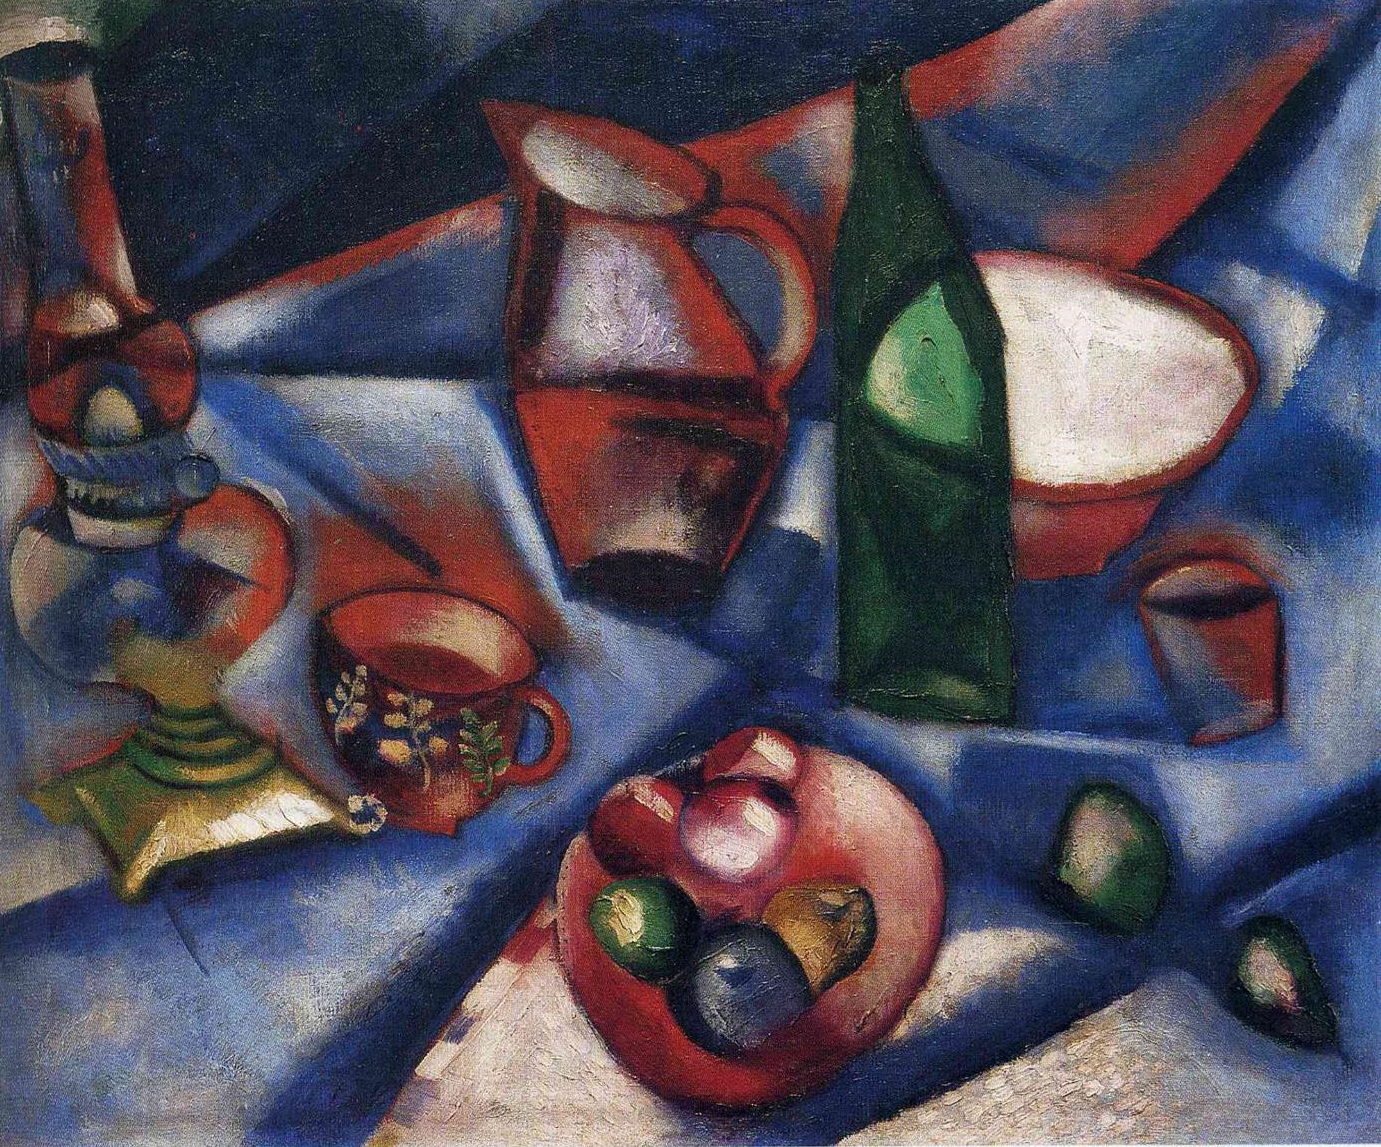 Marc+Chagall-1887-1985 (364).jpg